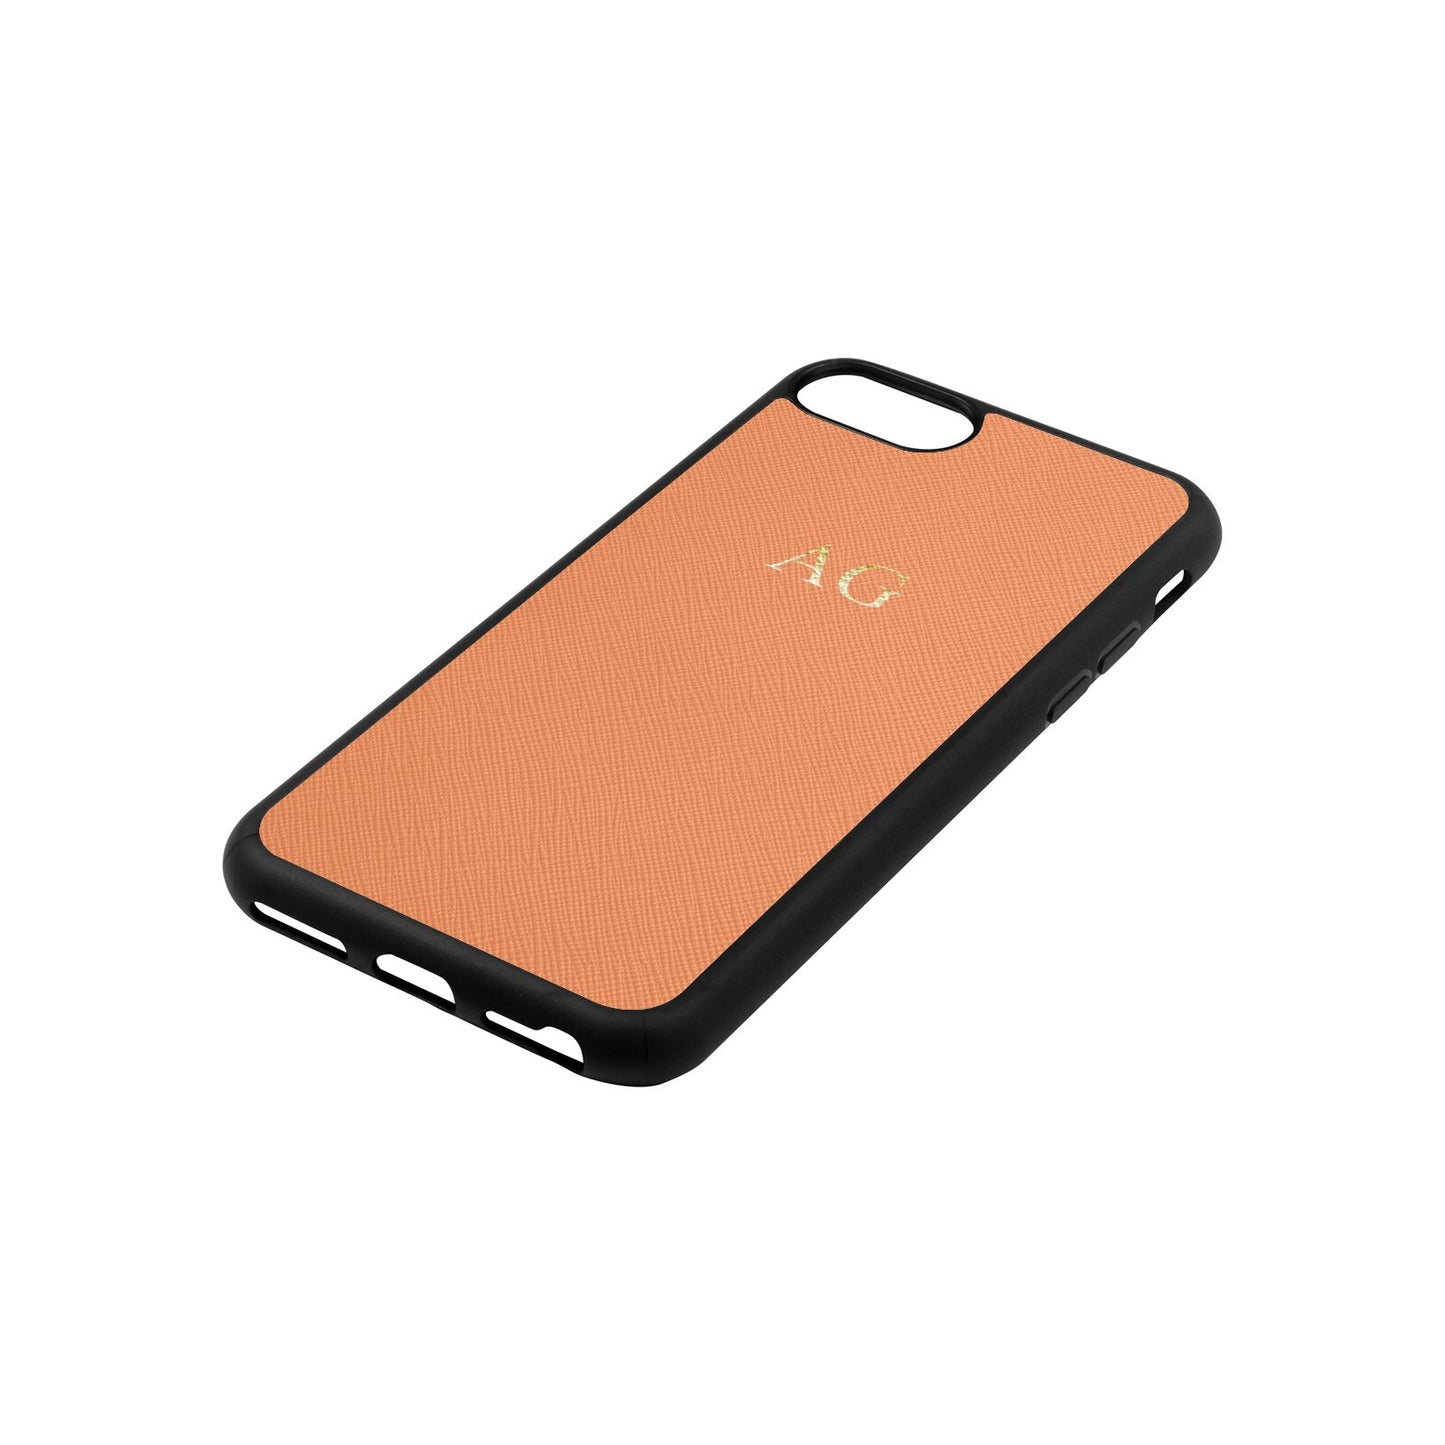 Personalised Orange Saffiano Leather iPhone 8 Case Side Angle